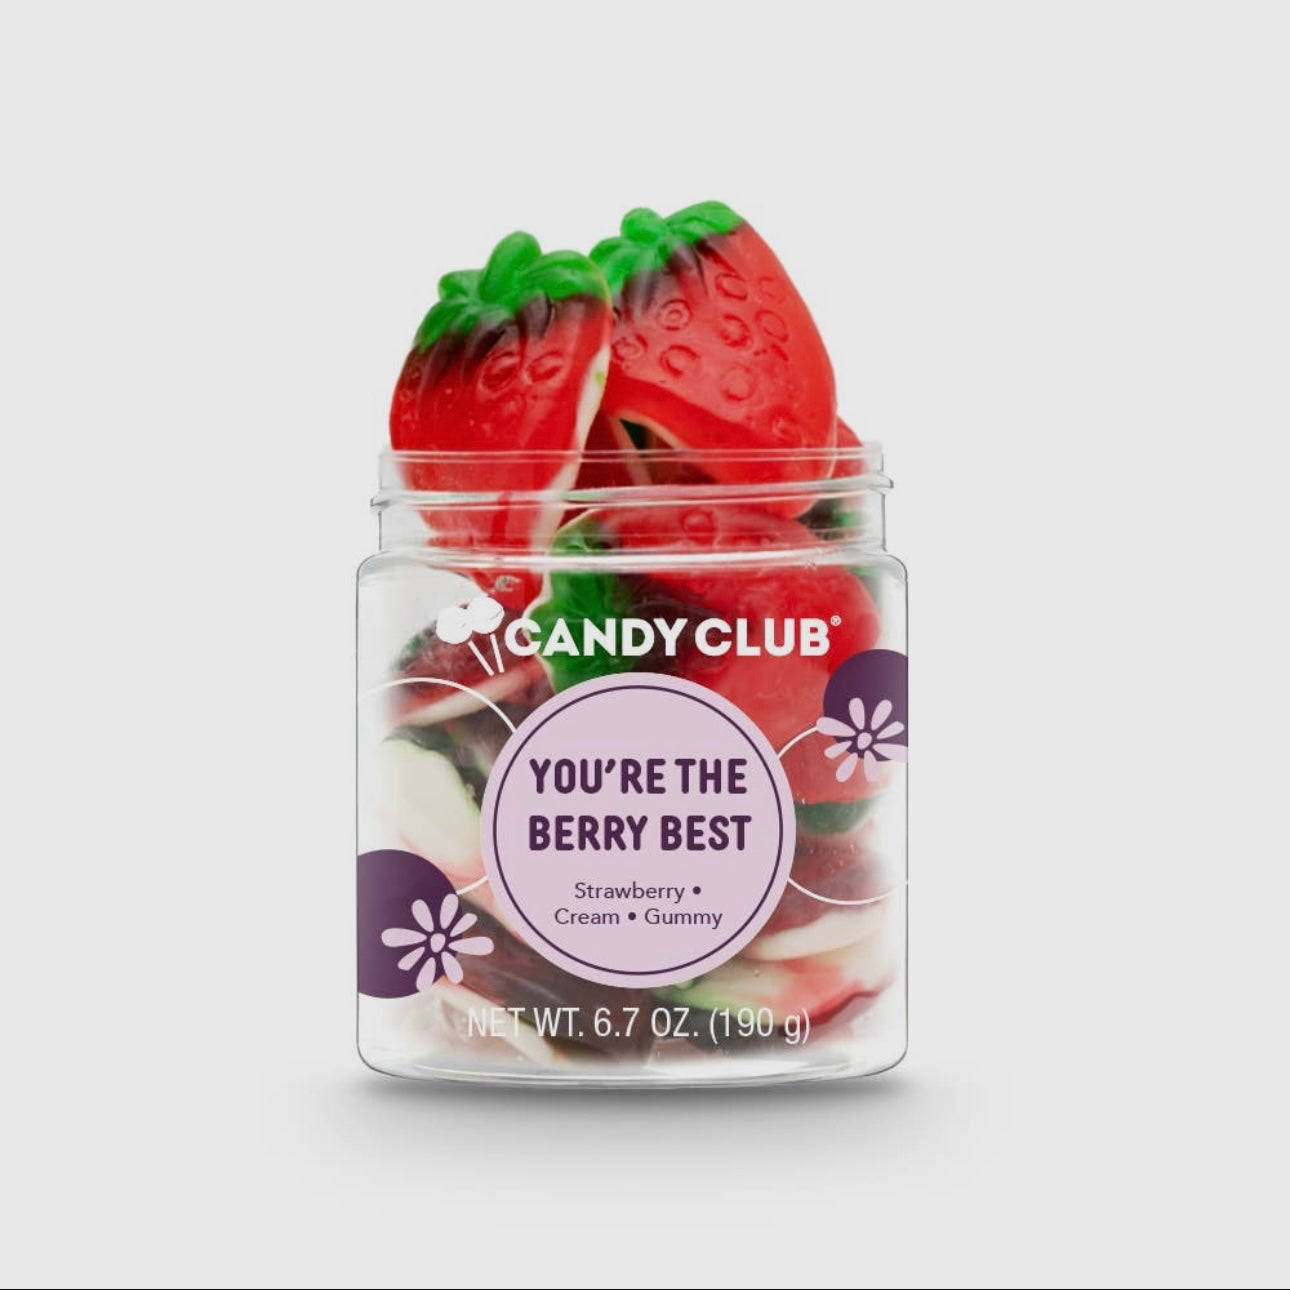 Candy Club Candy